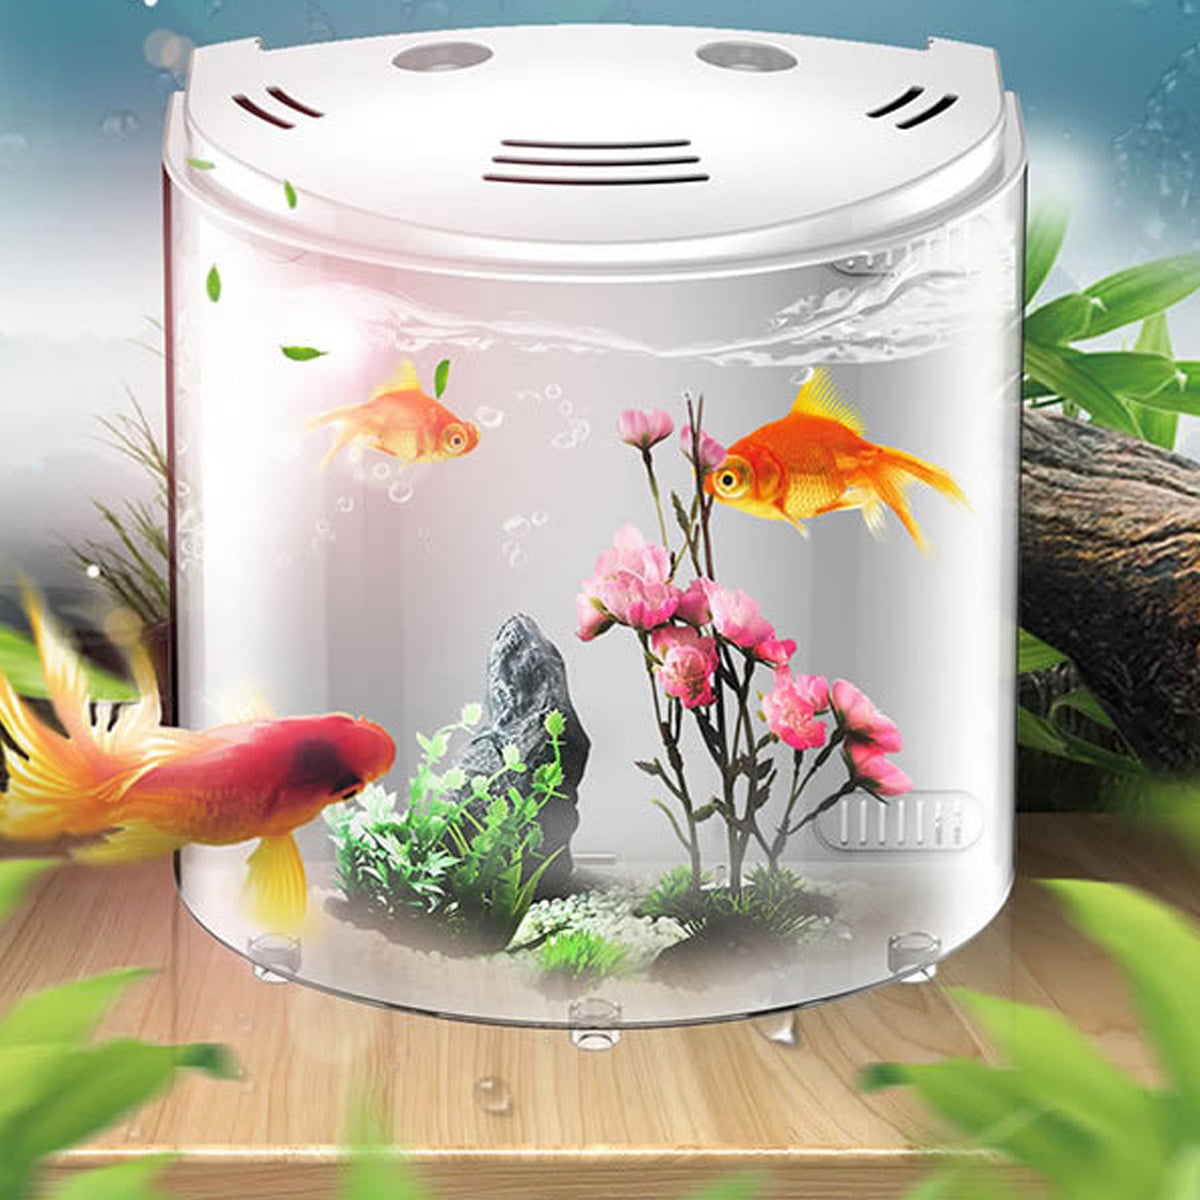 Mini Fish Tank Betta Fish Bowl Half Moon Aquarium Kit with